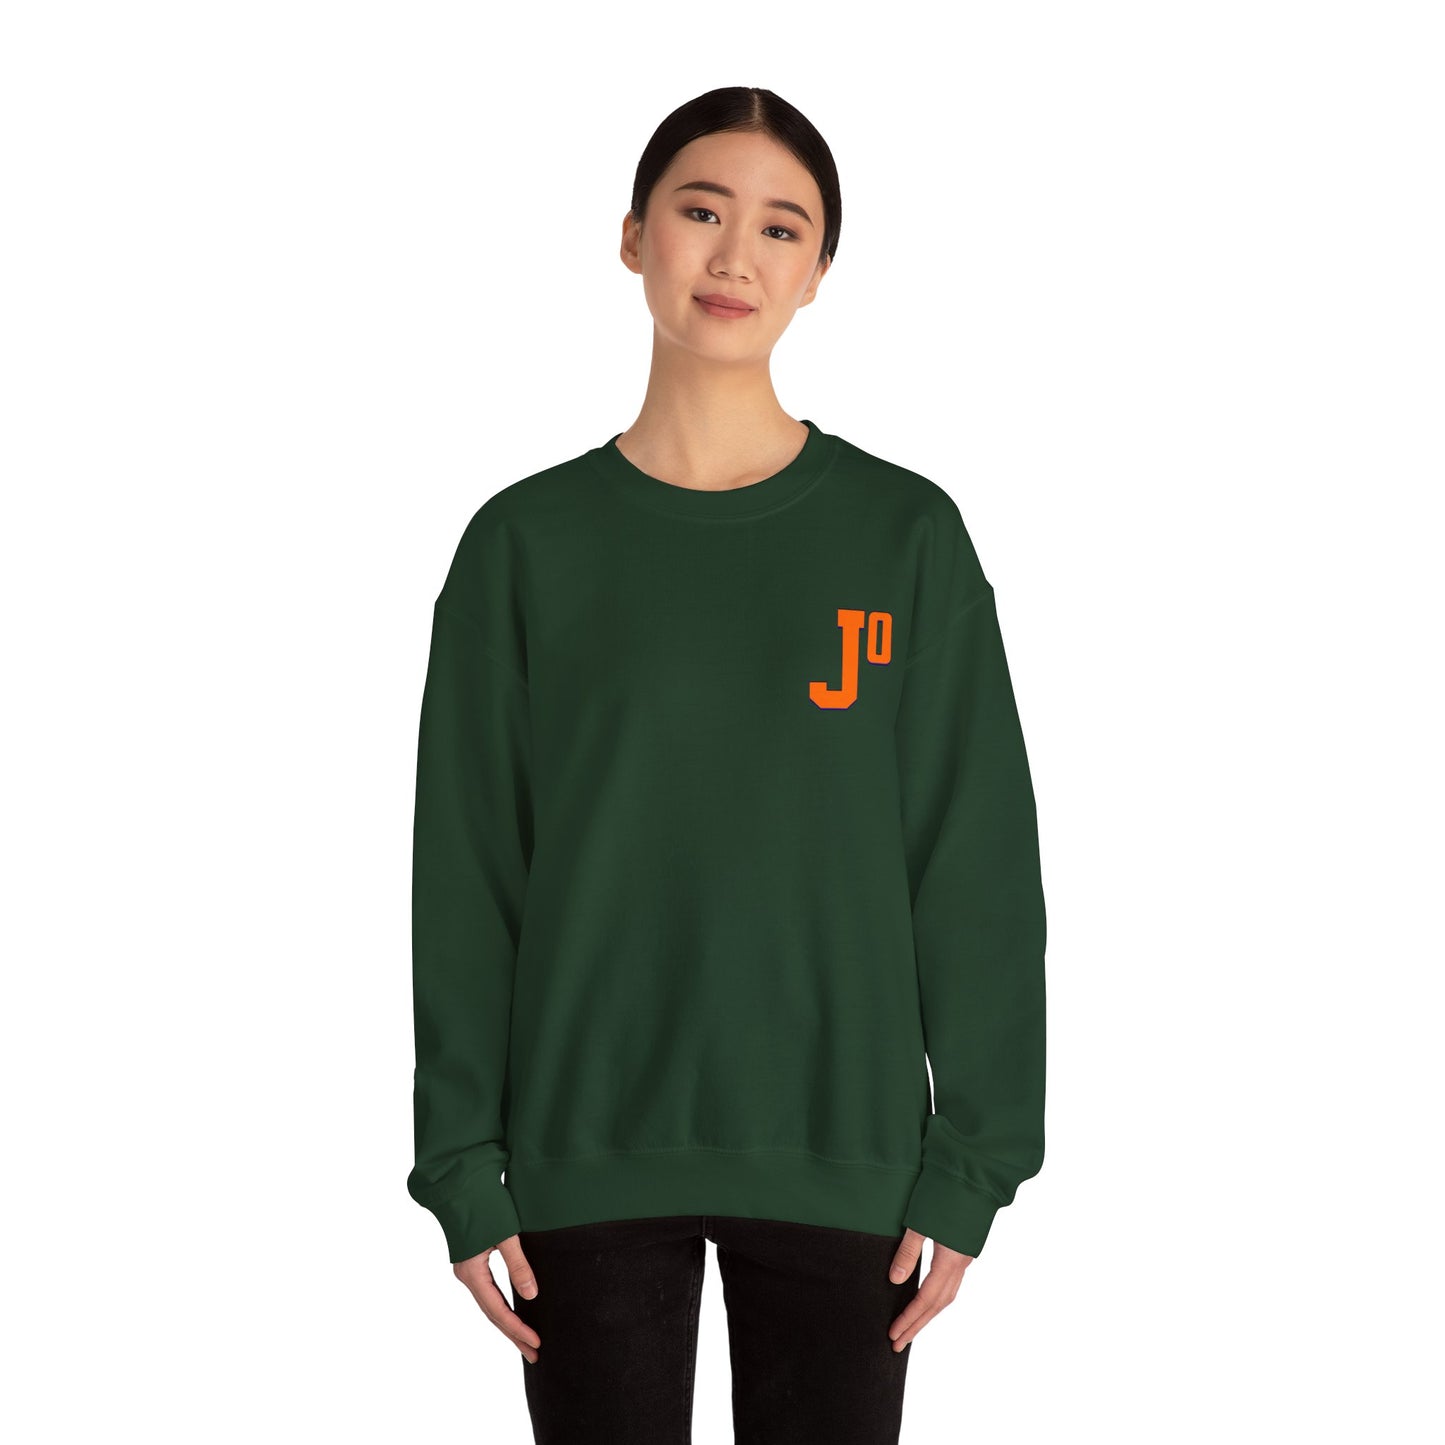 J0 Crewneck Sweatshirt